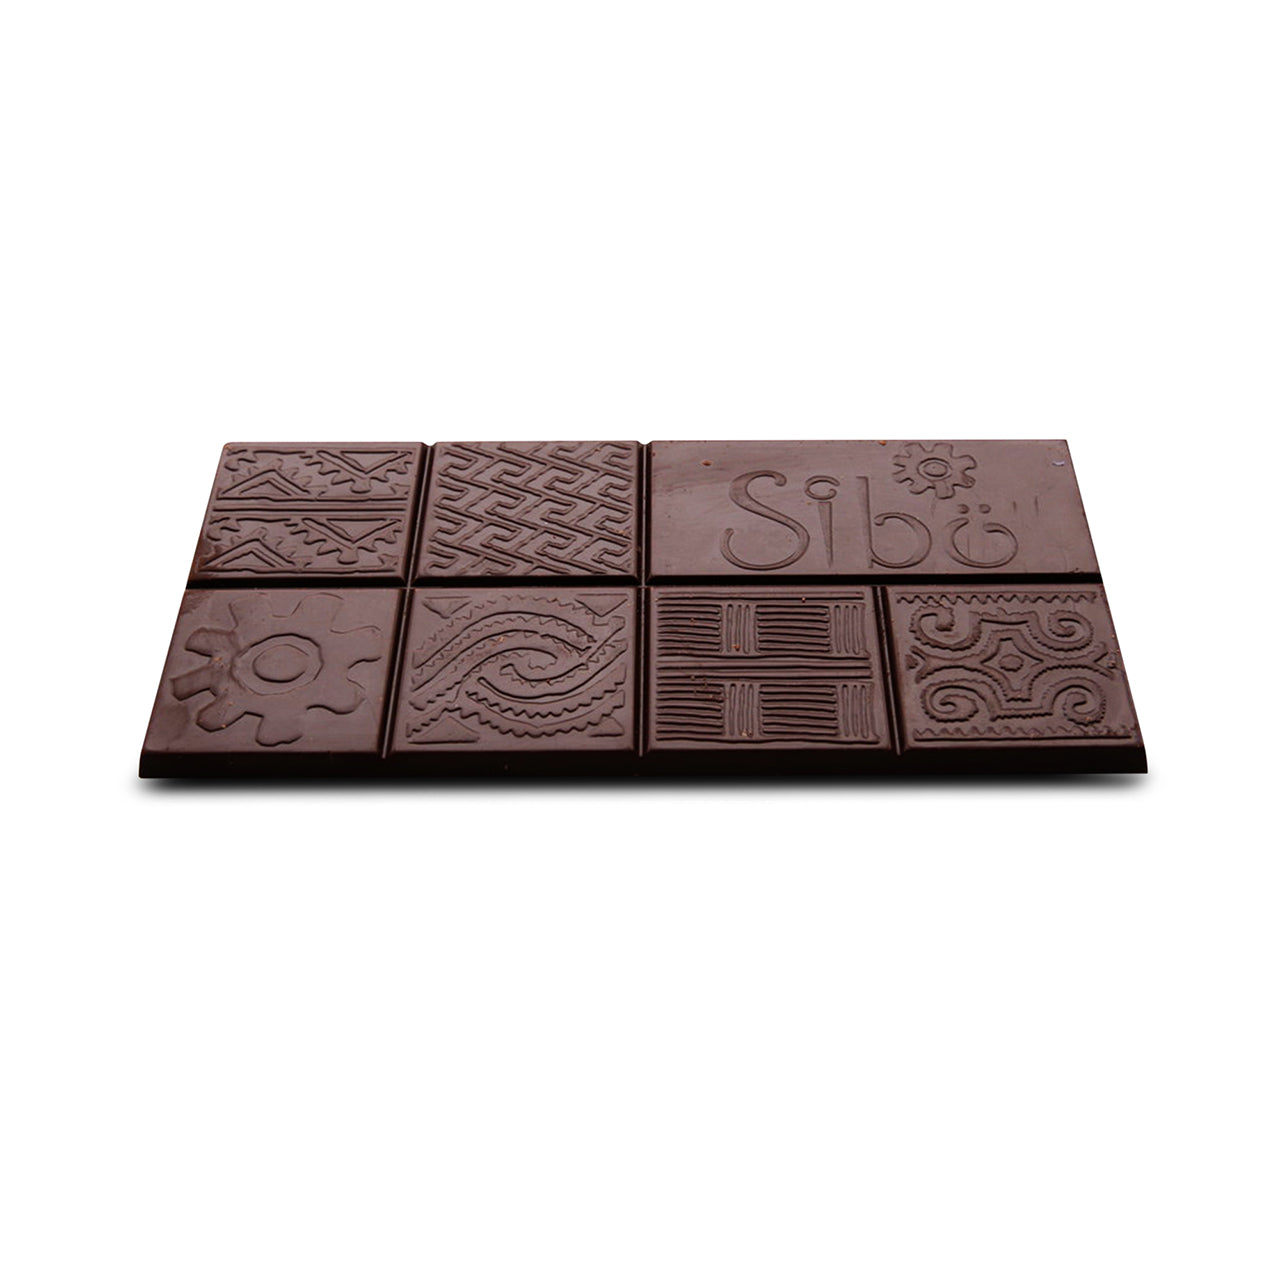 Sibu Chocolate シブチョコレート カフェコンレチェ(50g)